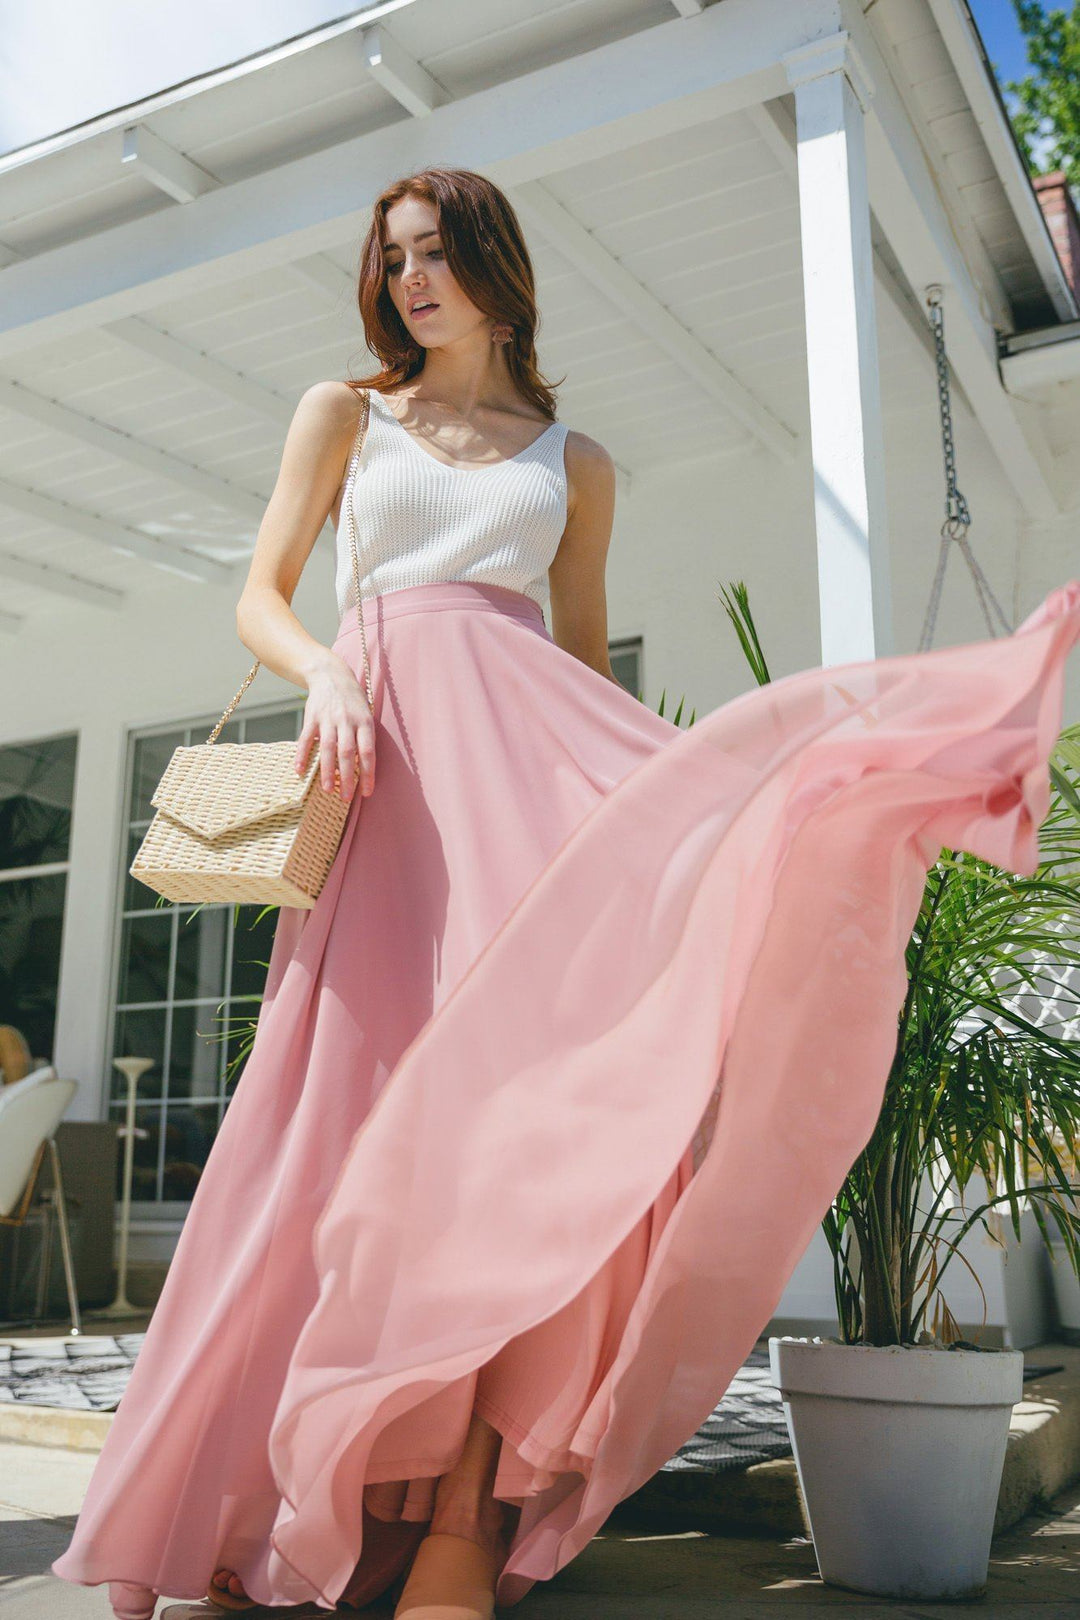 Full Maxi Skirt - Amelia - Morning Lavender Online Boutique